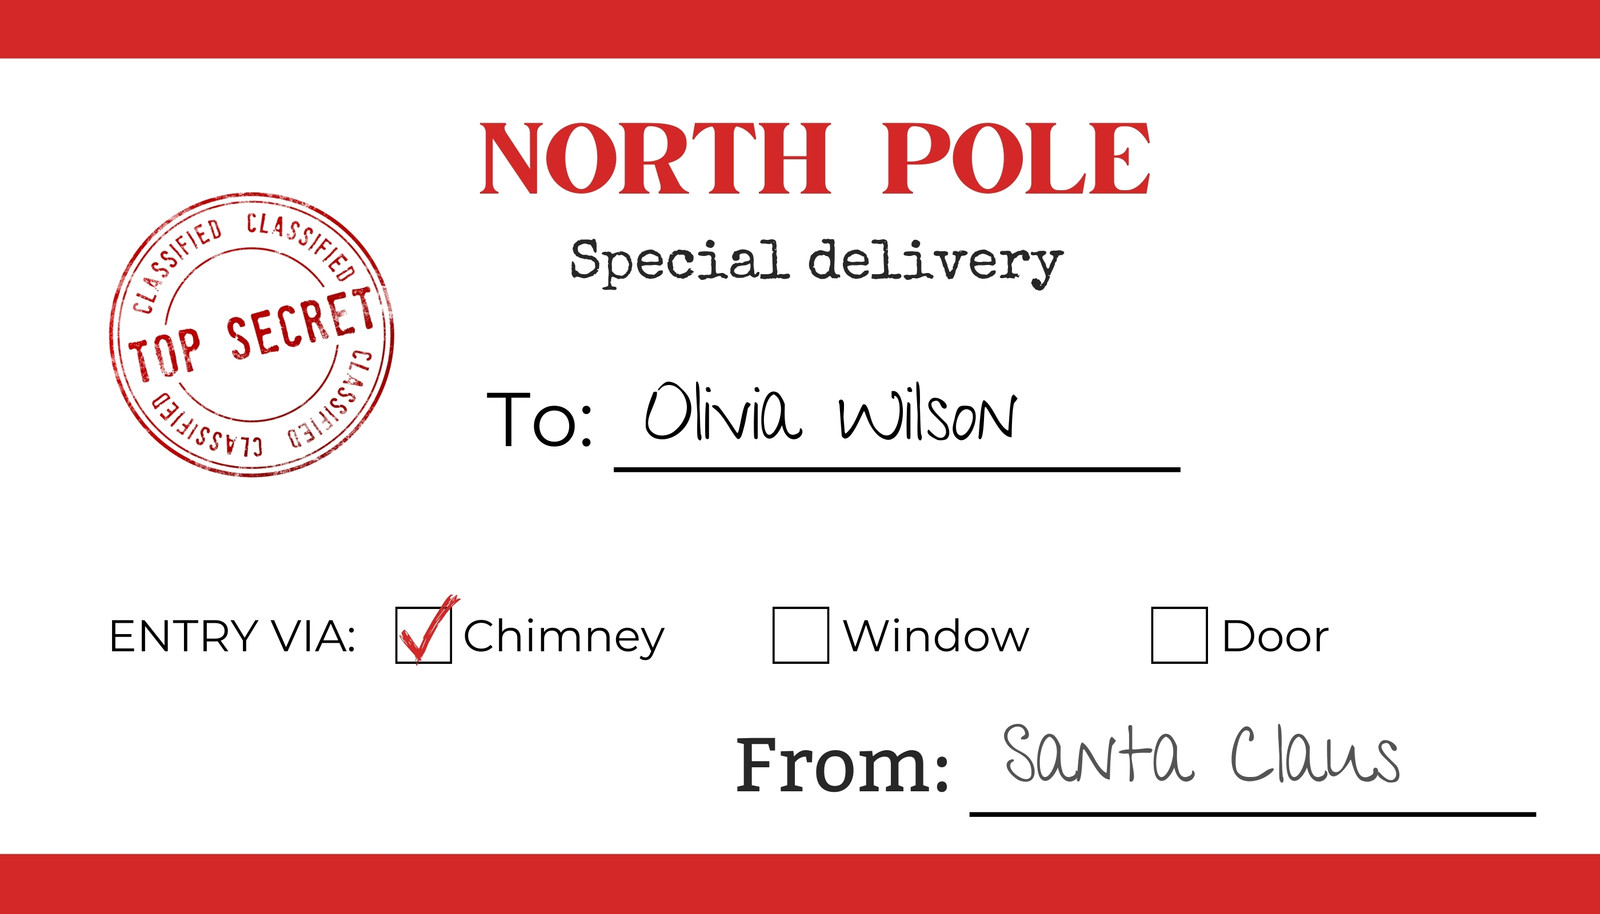 Free Printable Santa Gift Tags